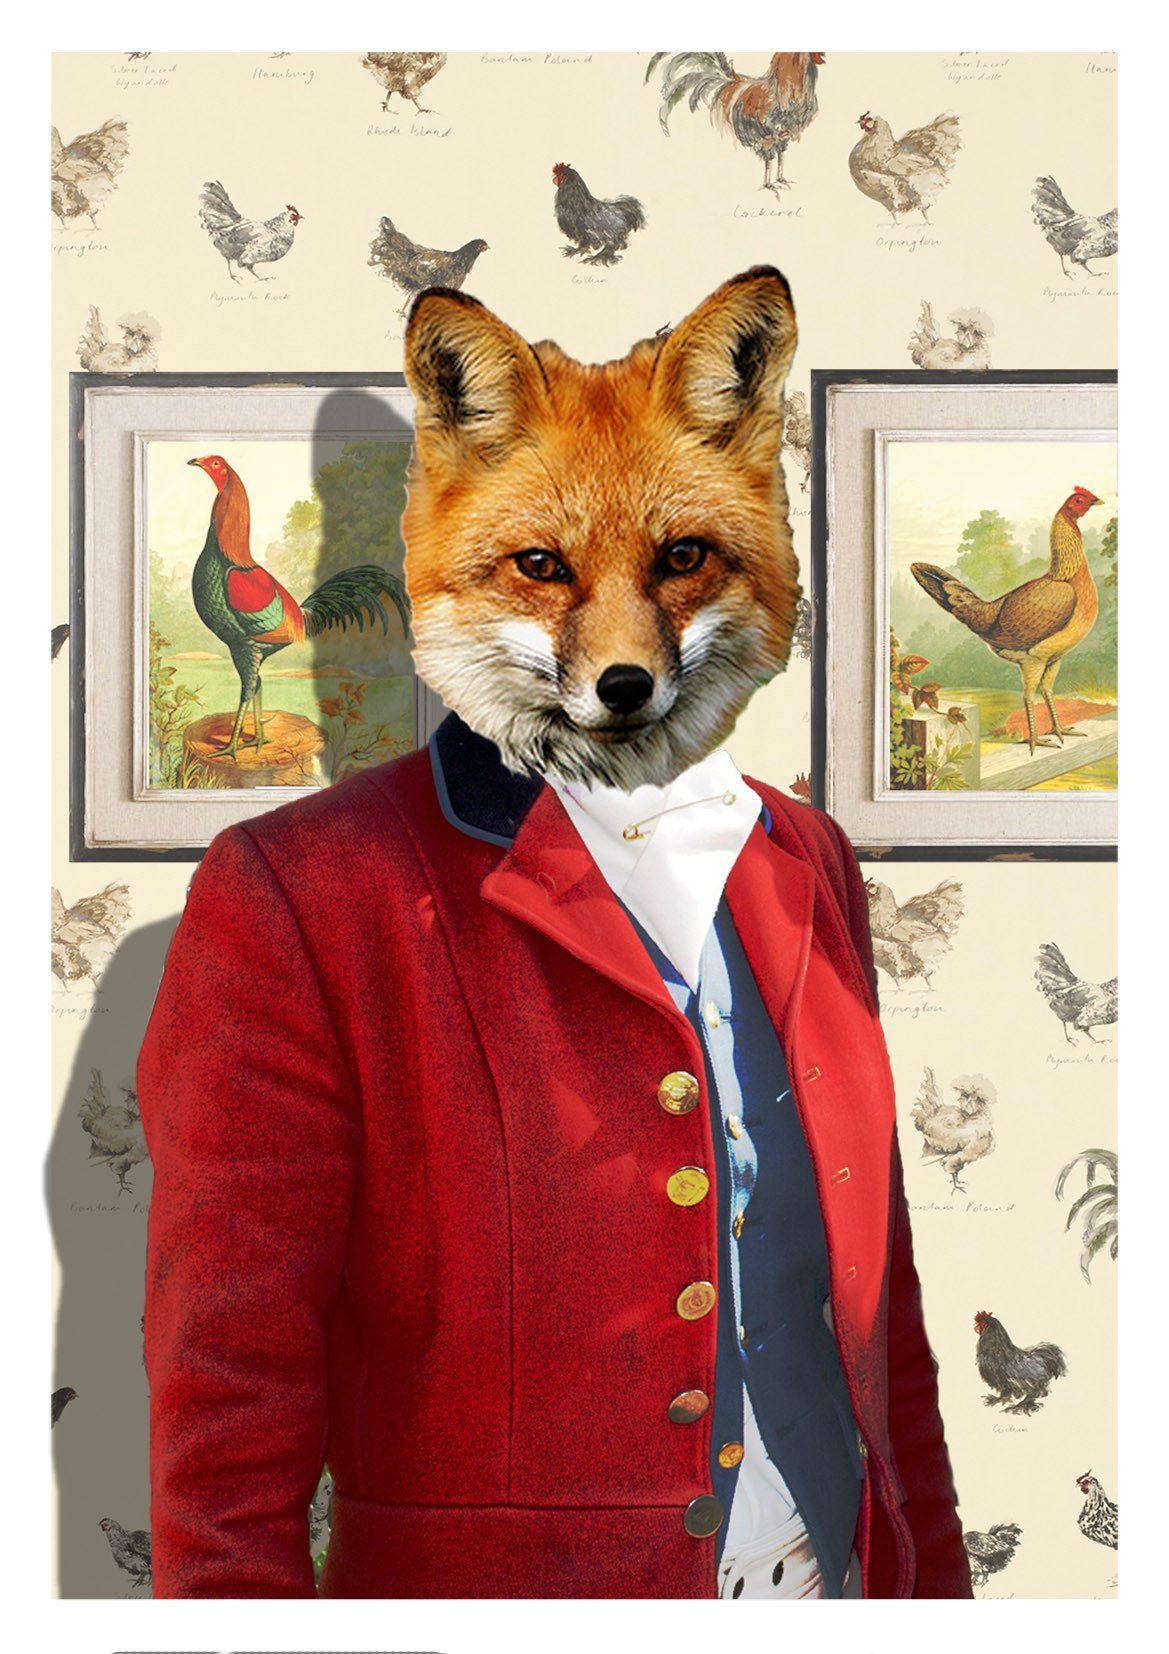 MR FOX: Fun Animal Art Print With Chickens - Pimlico Prints